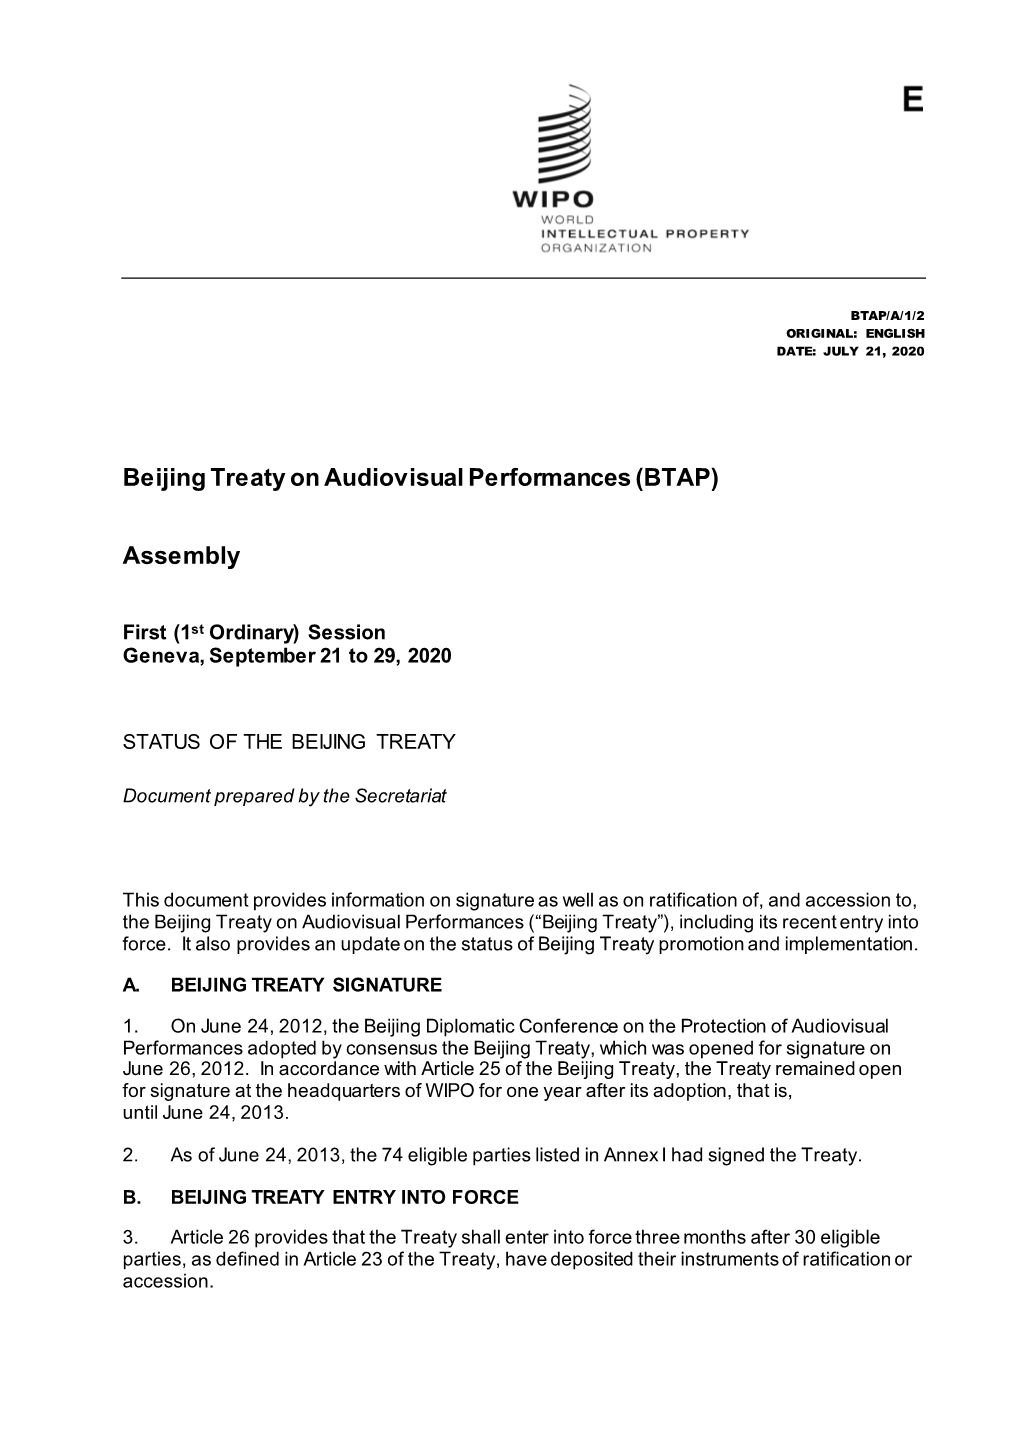 Beijing Treaty on Audiovisual Performances (BTAP) Assembly